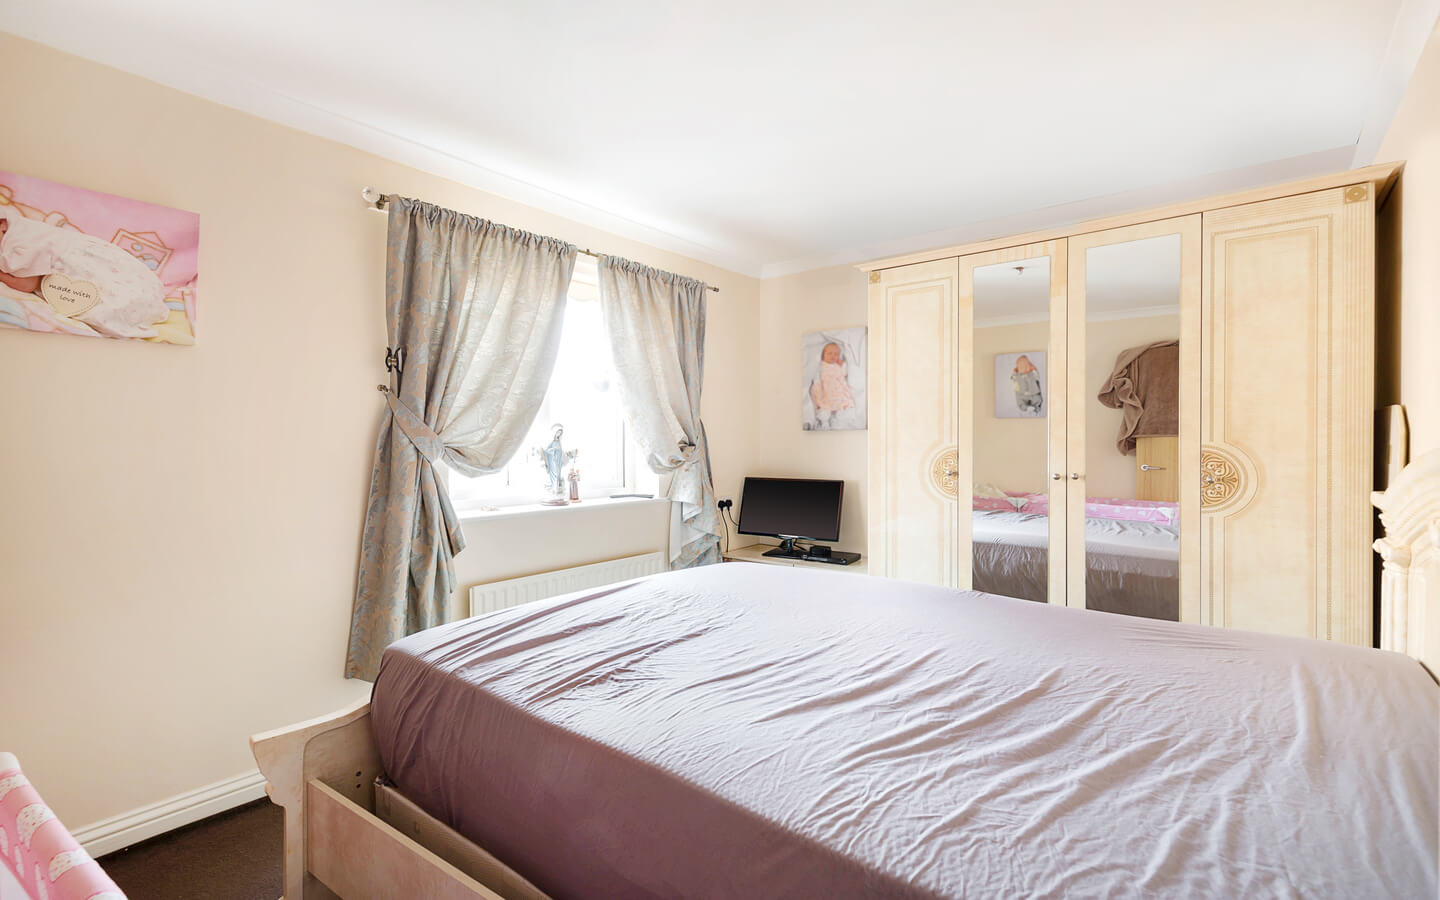 1 Bedroom Flat For Sale - Hackney - London - 5 E9 5HF